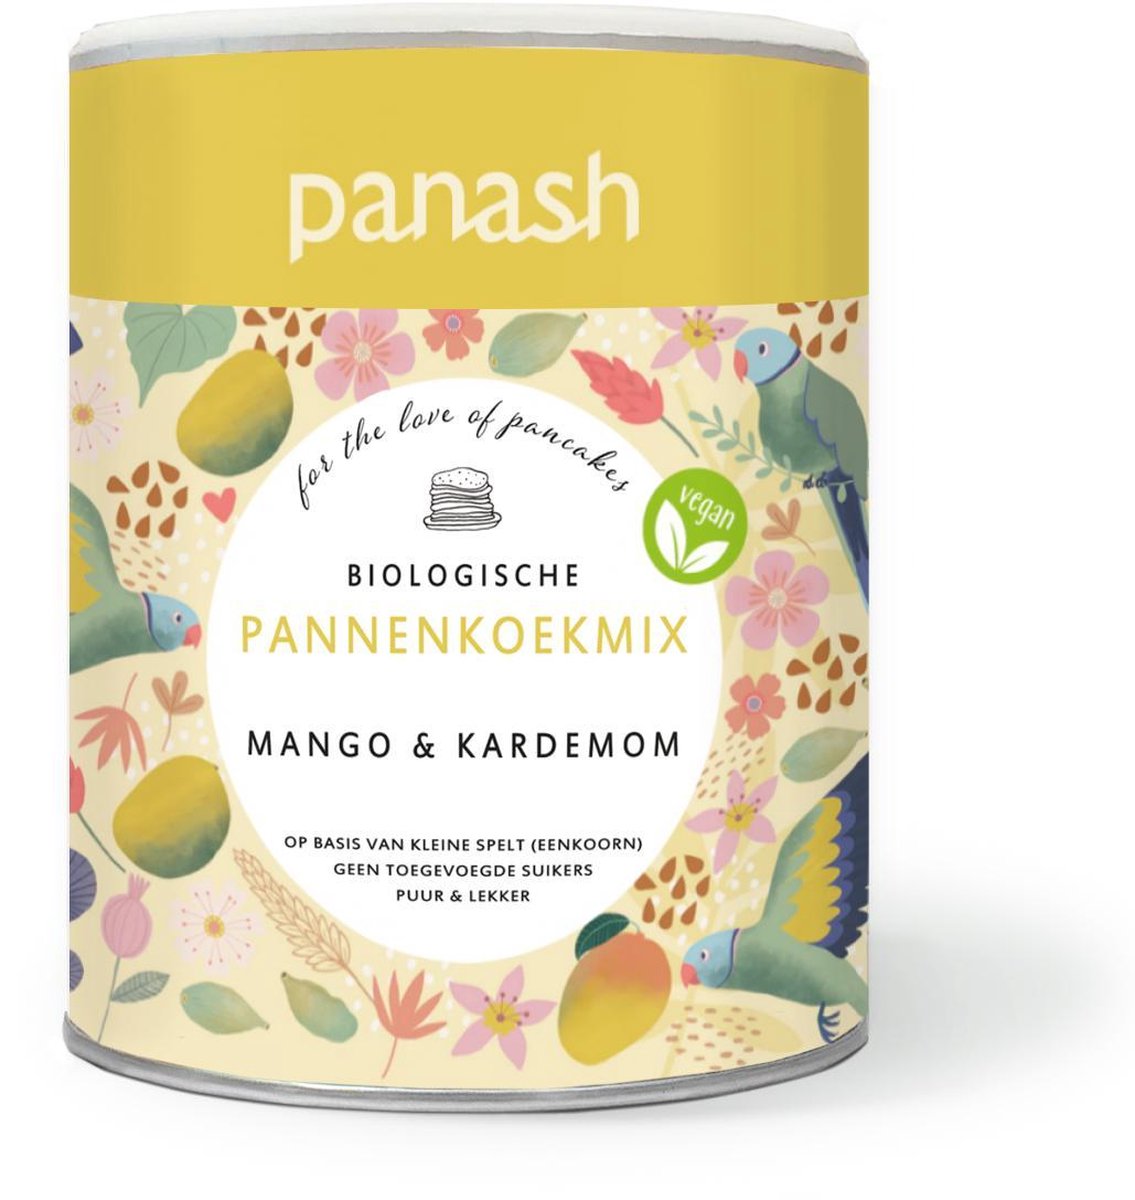 Panash Mango & Kardemom pannenkoekmix - biologisch & vegan - geen e-nummers - 400 gram pannenkoekmix - Panash